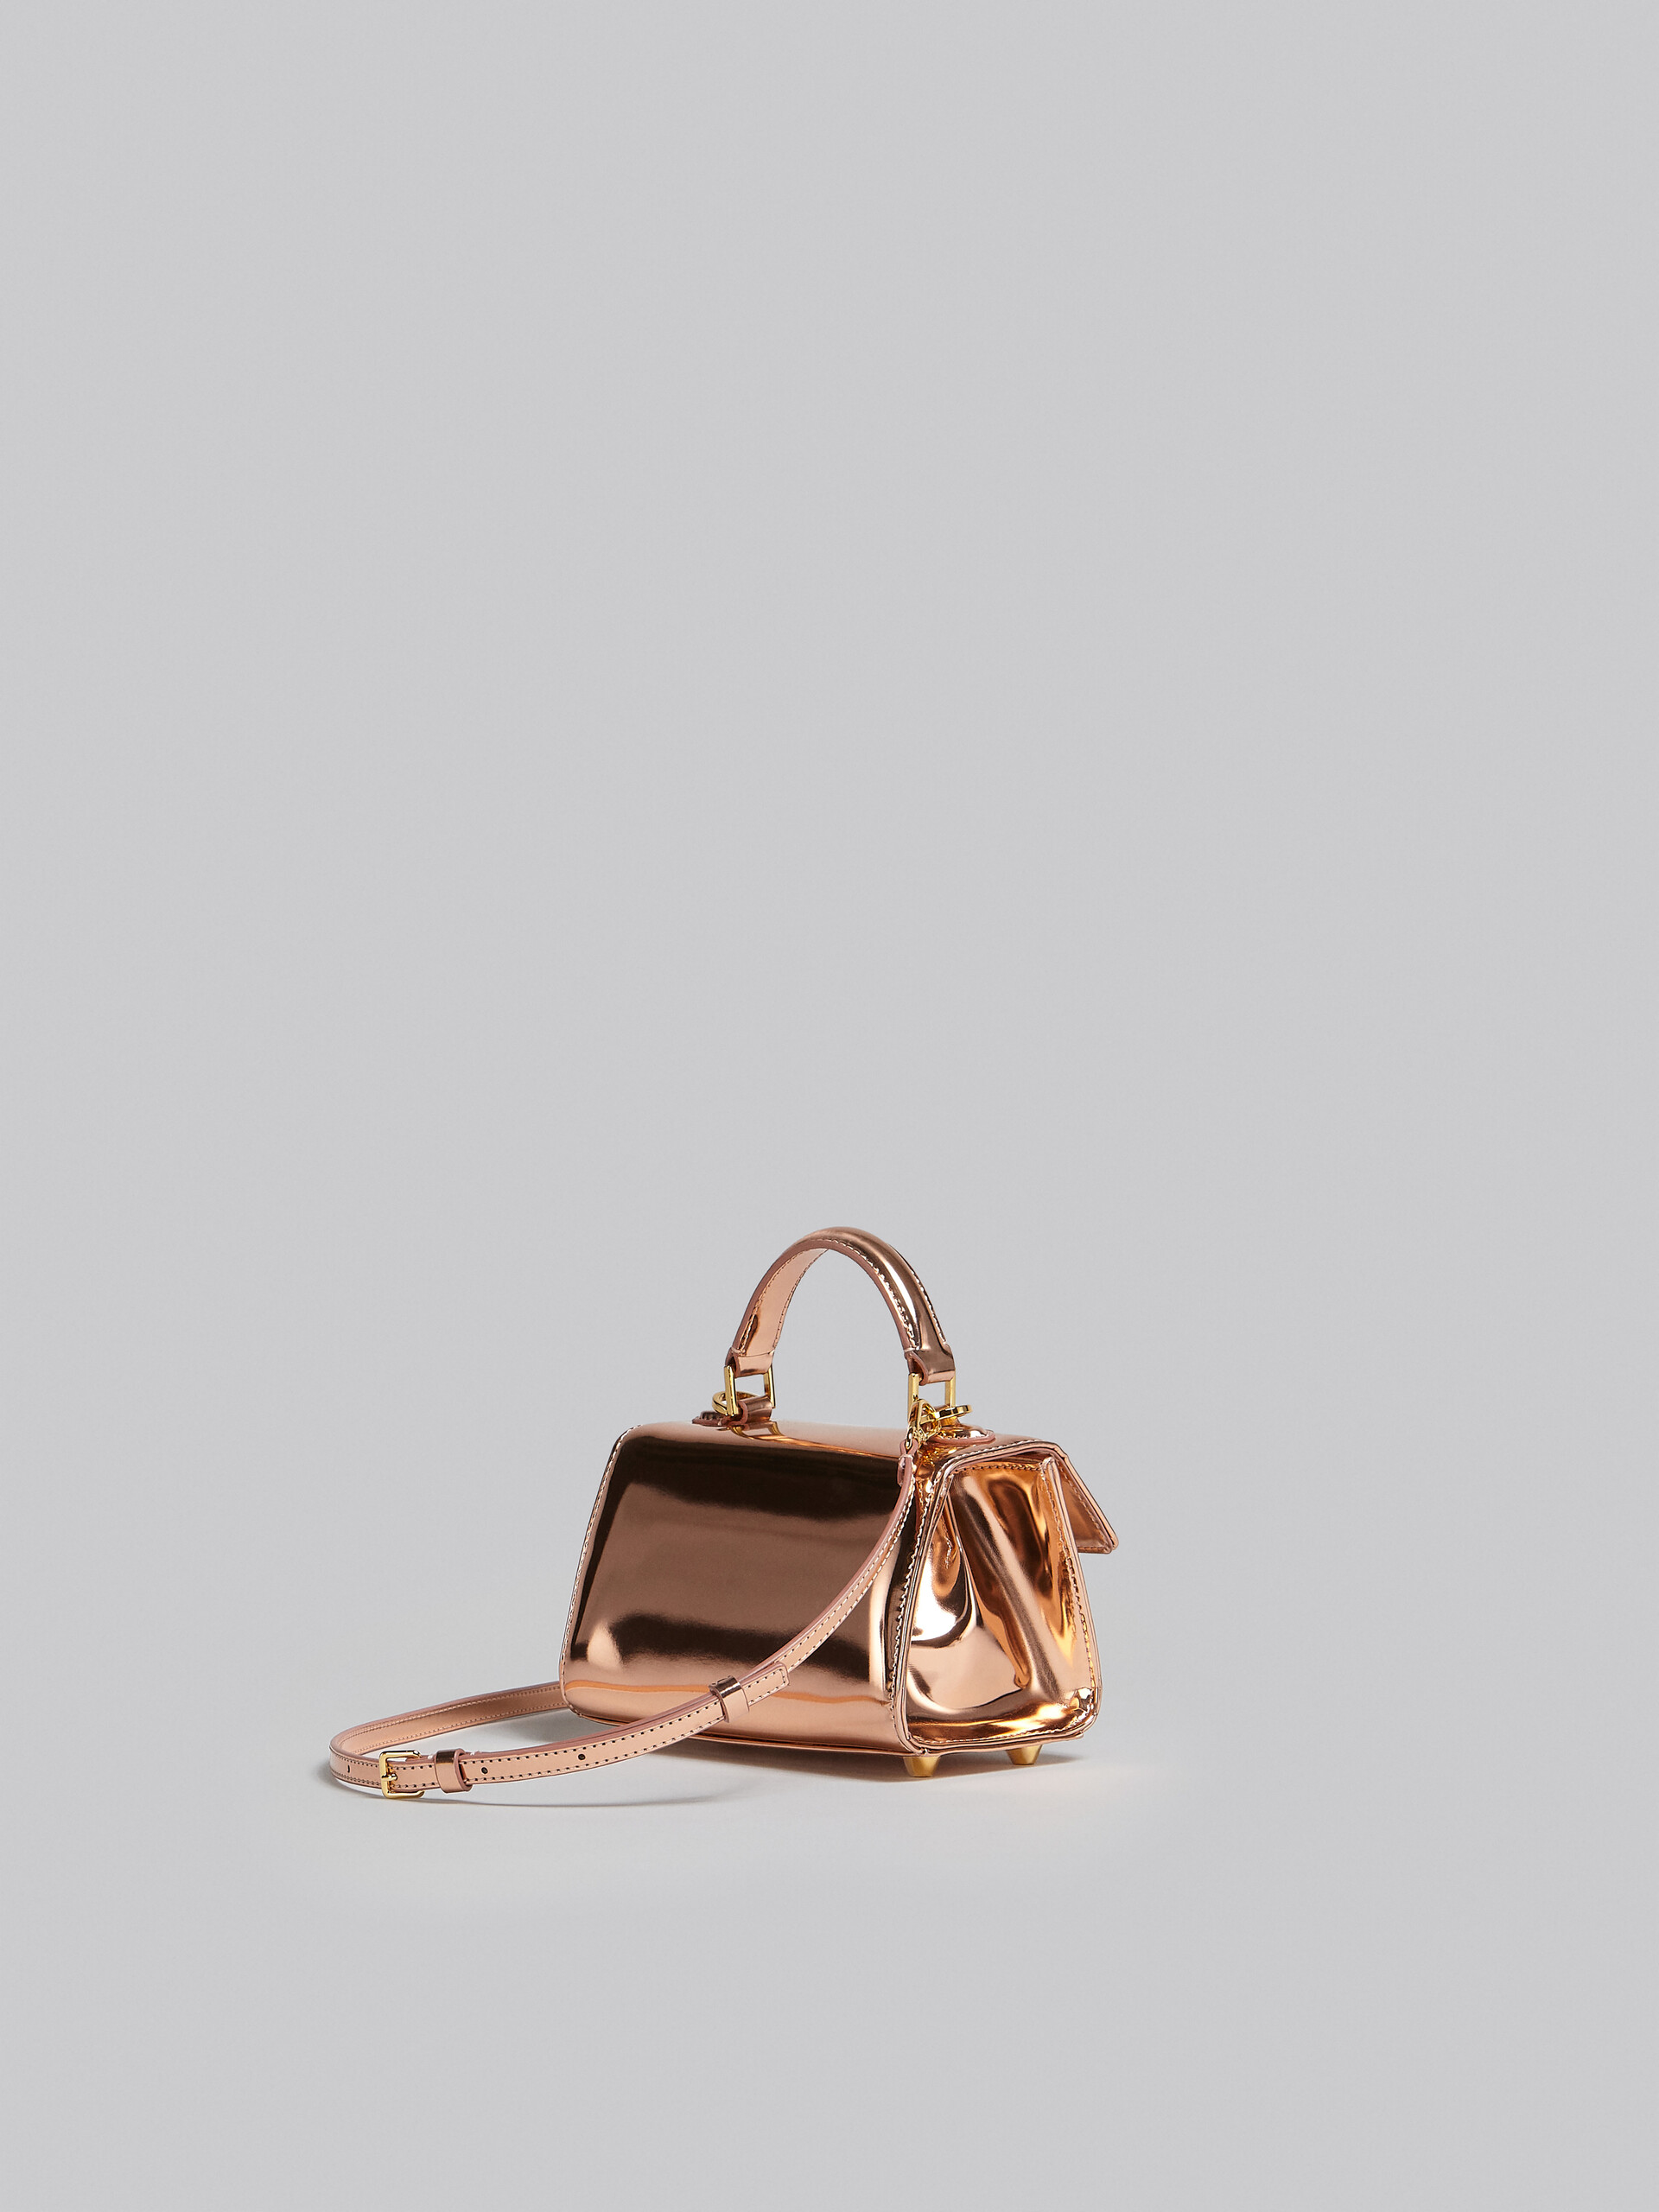 Relativity Mini Bag in pink mirrored leather - Handbag - Image 2